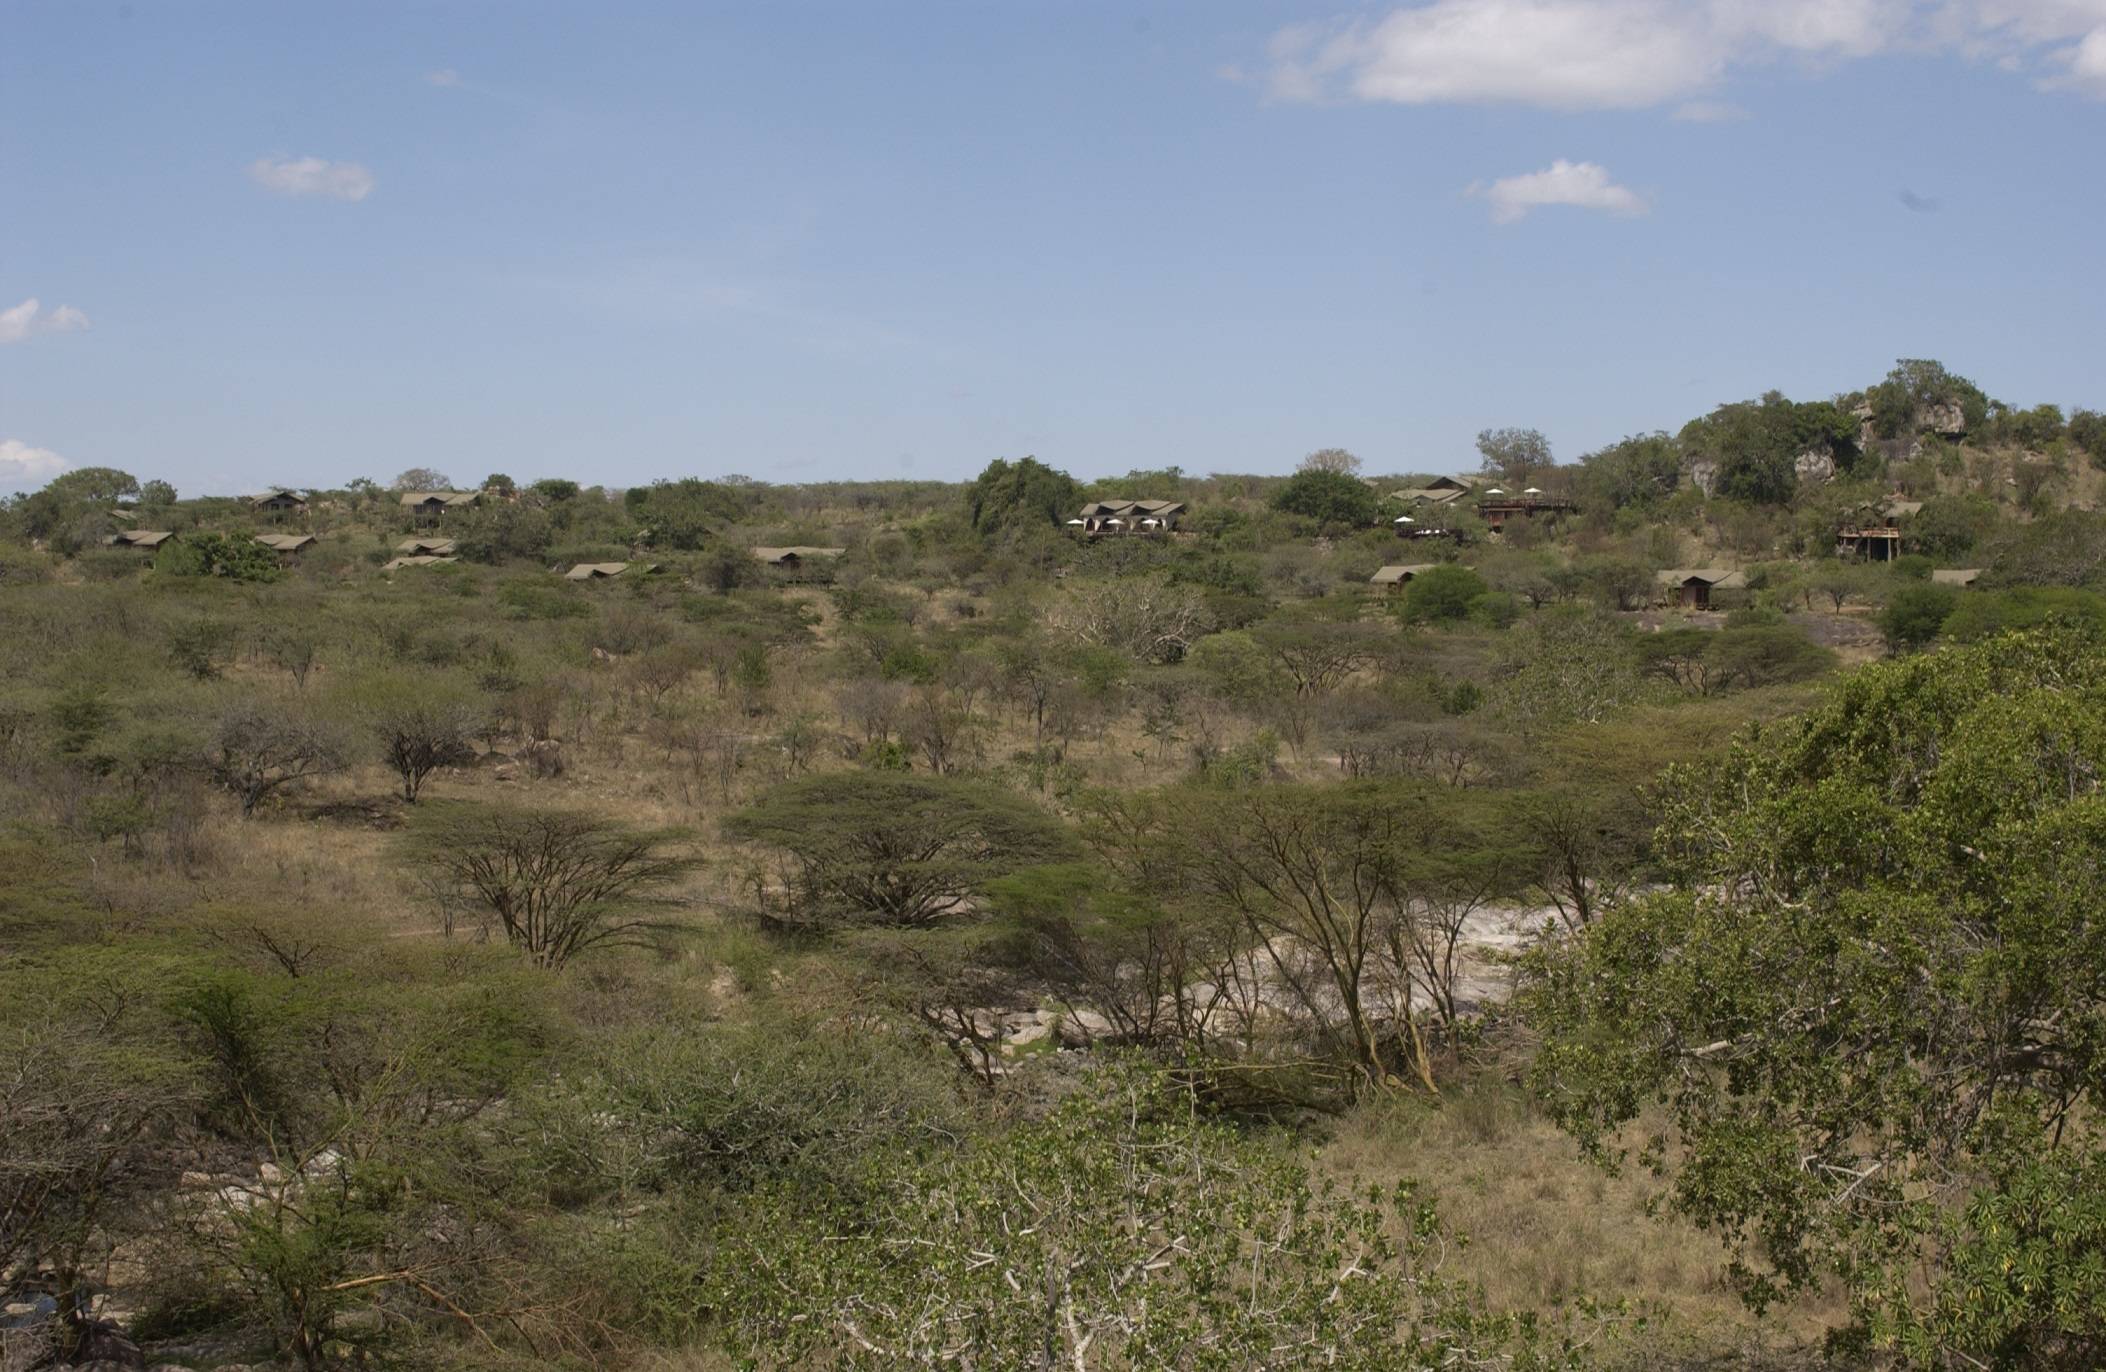 Serengeti Migration Camp